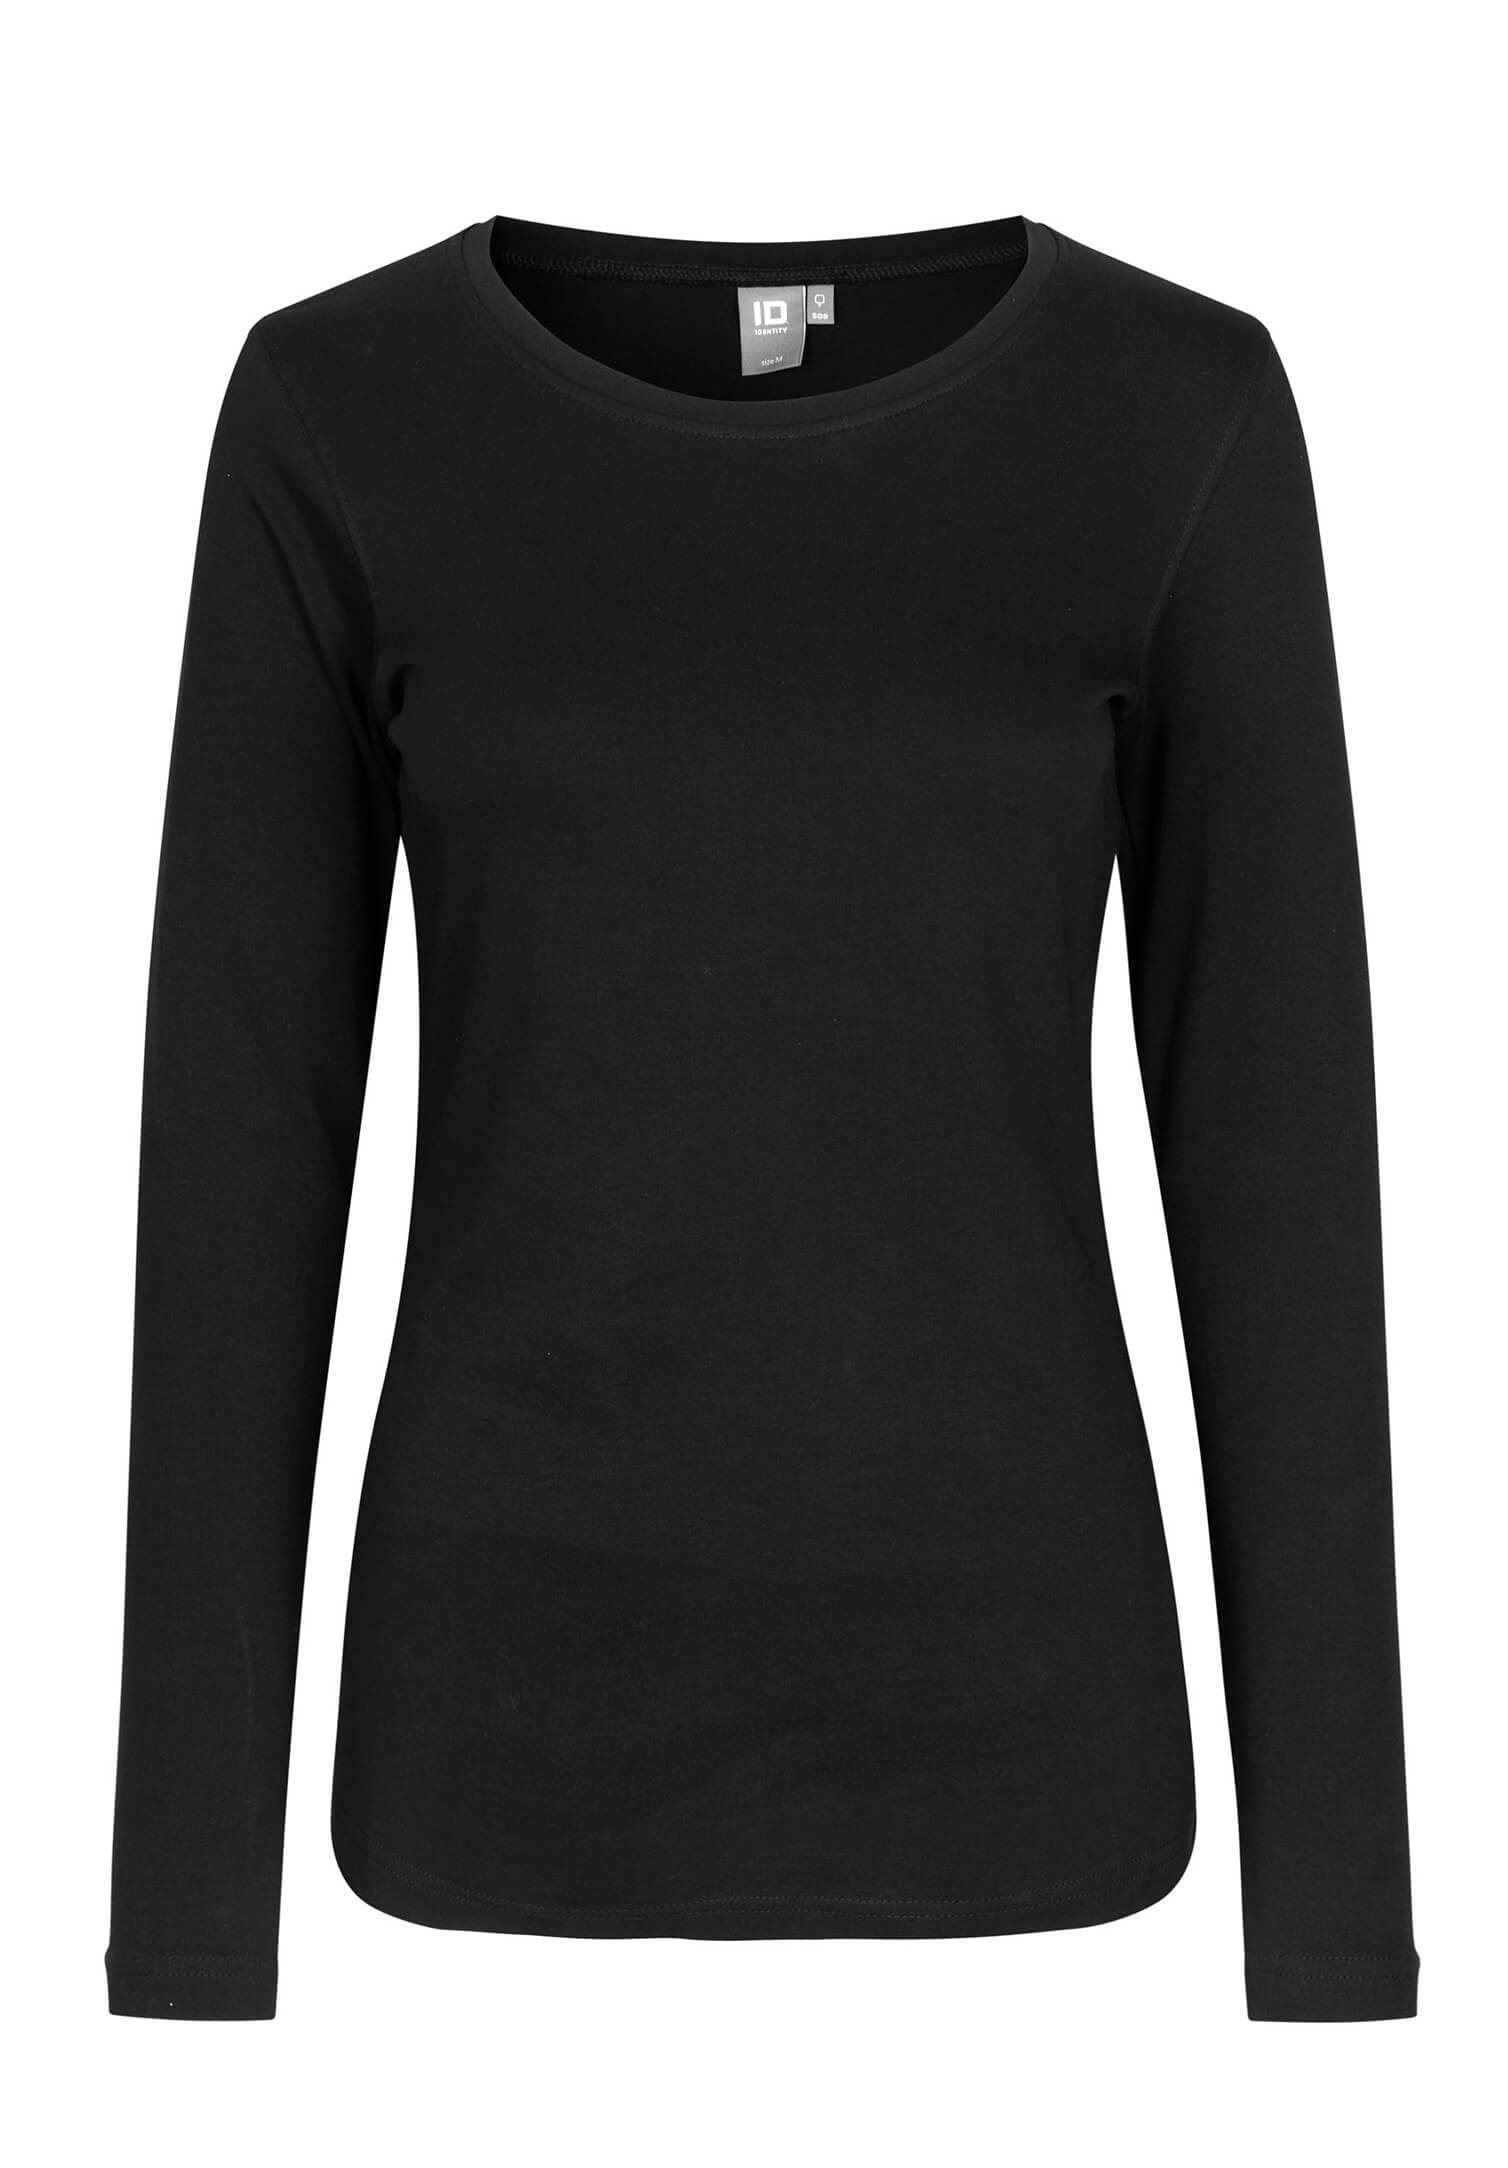 Damen Langarmshirt - schwarz - L